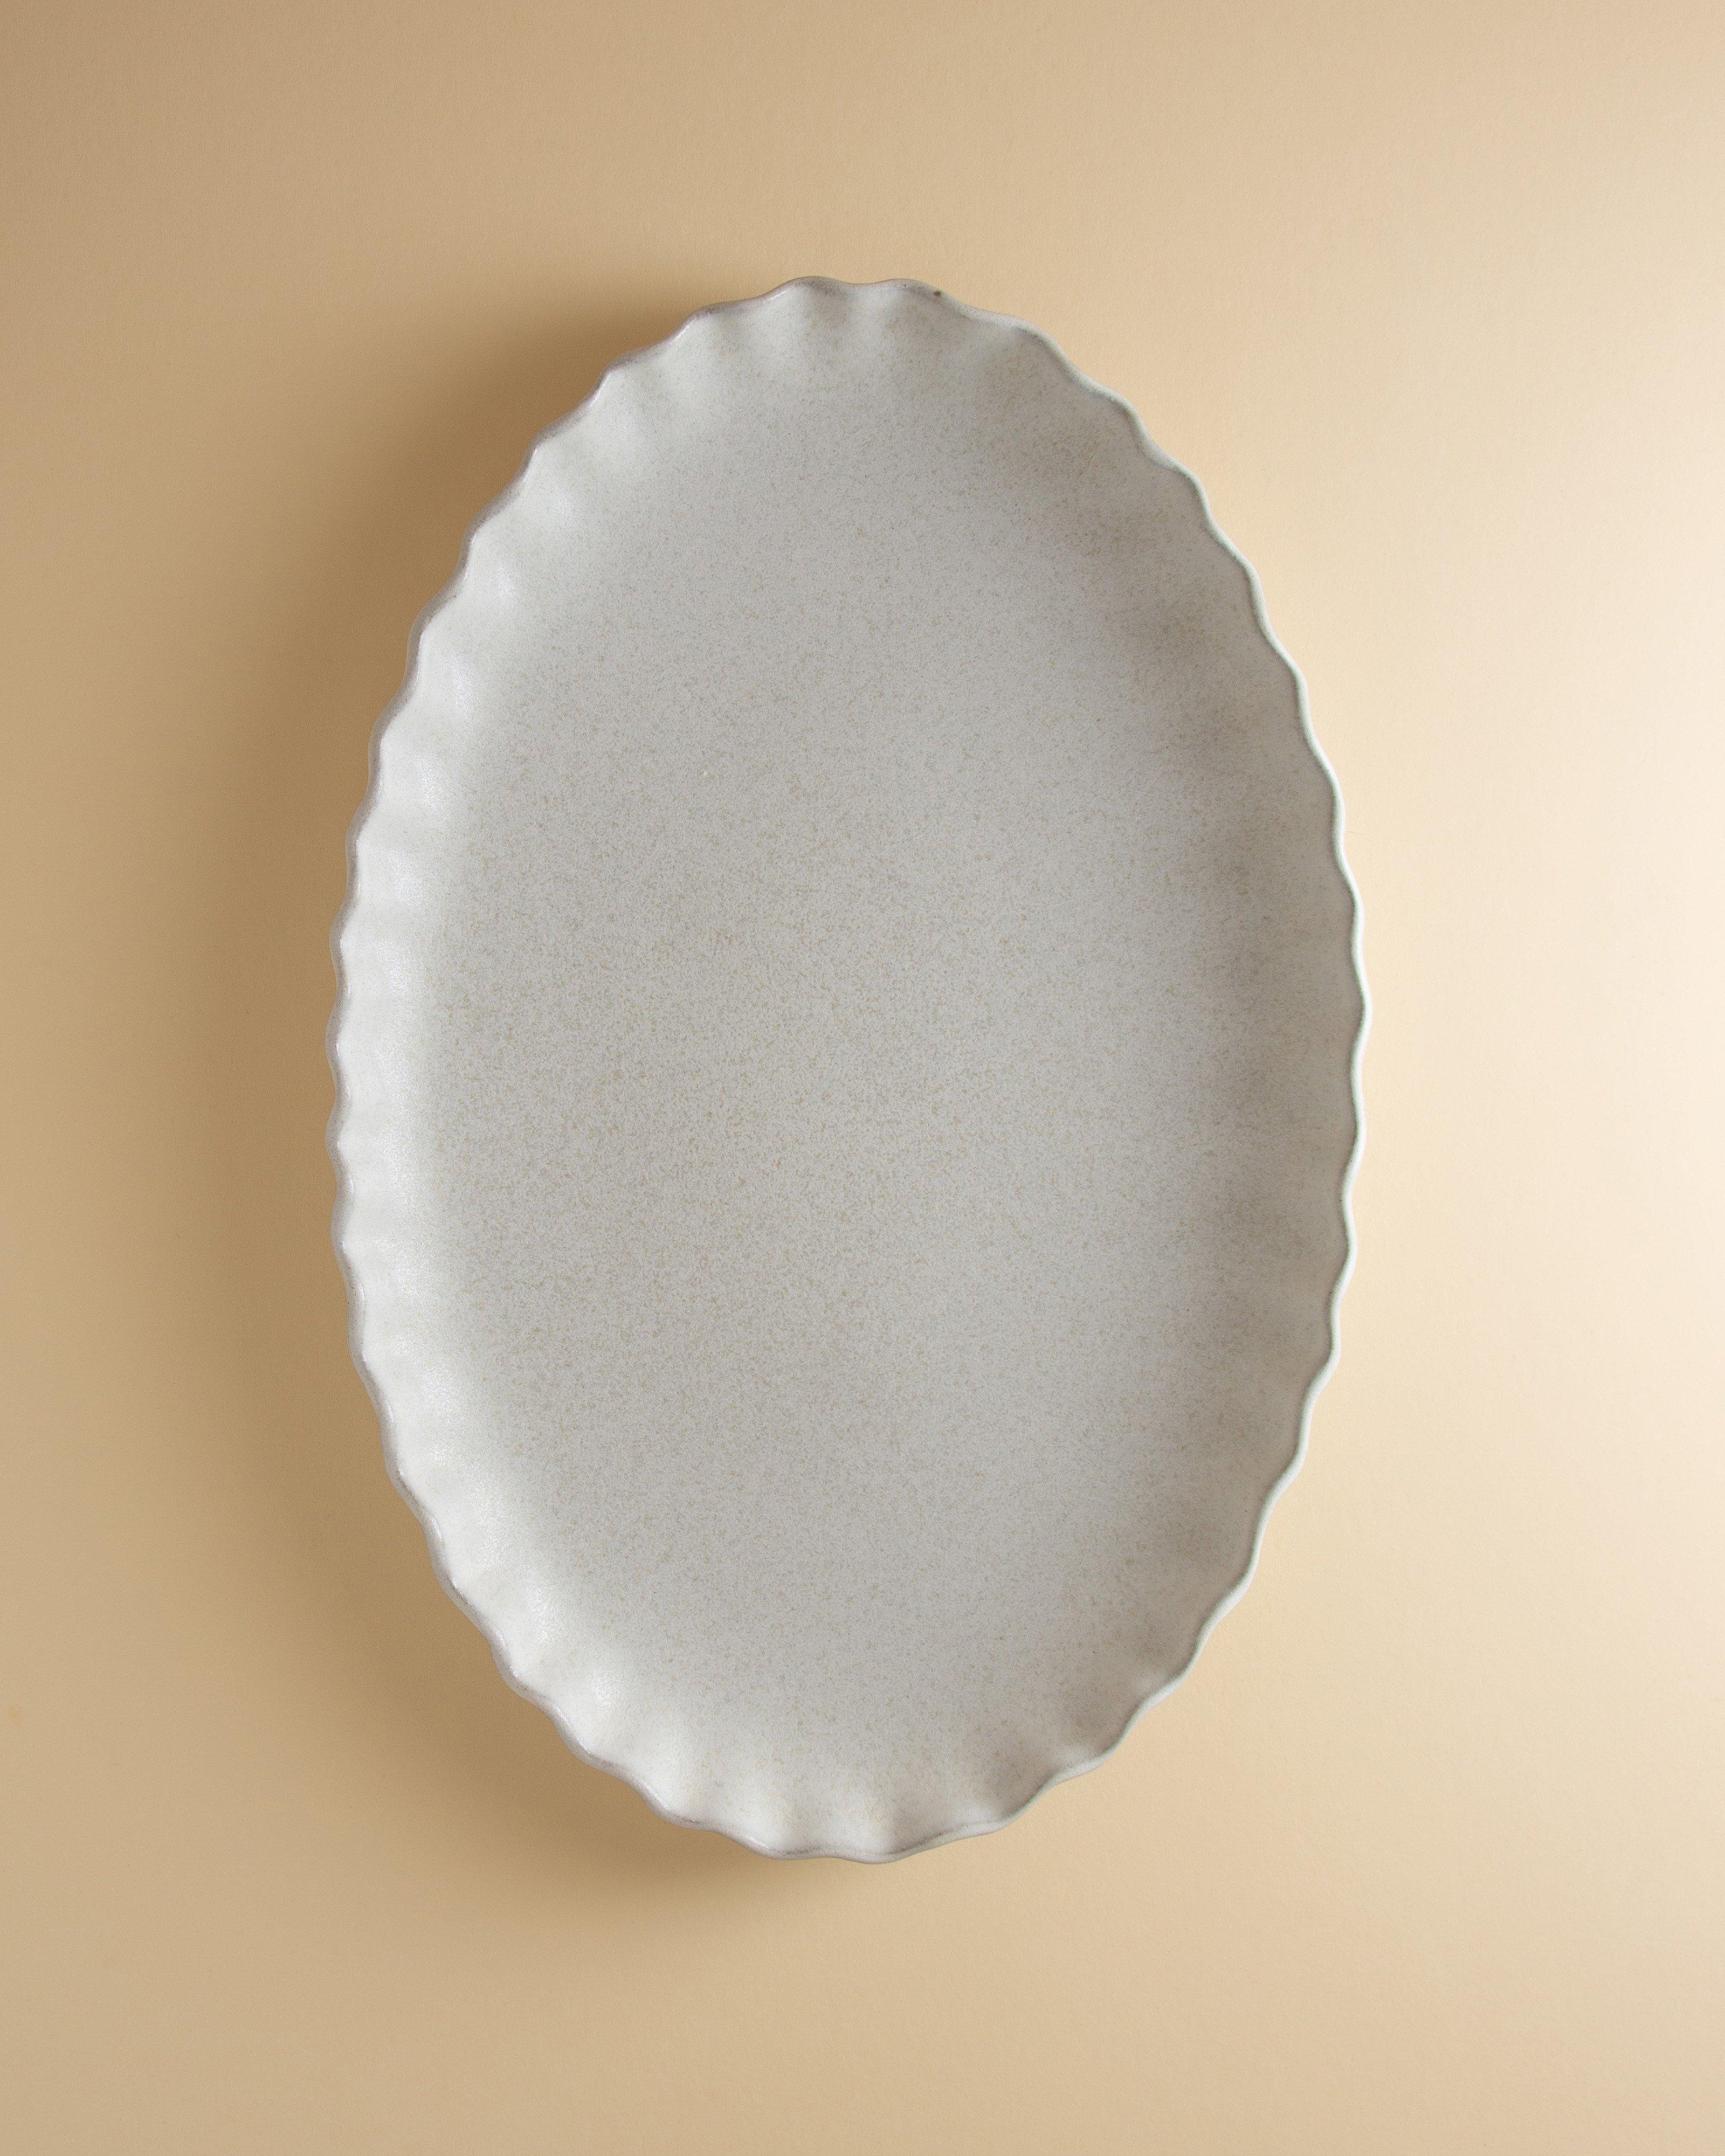 Ruffle Oval Platter -  Milk